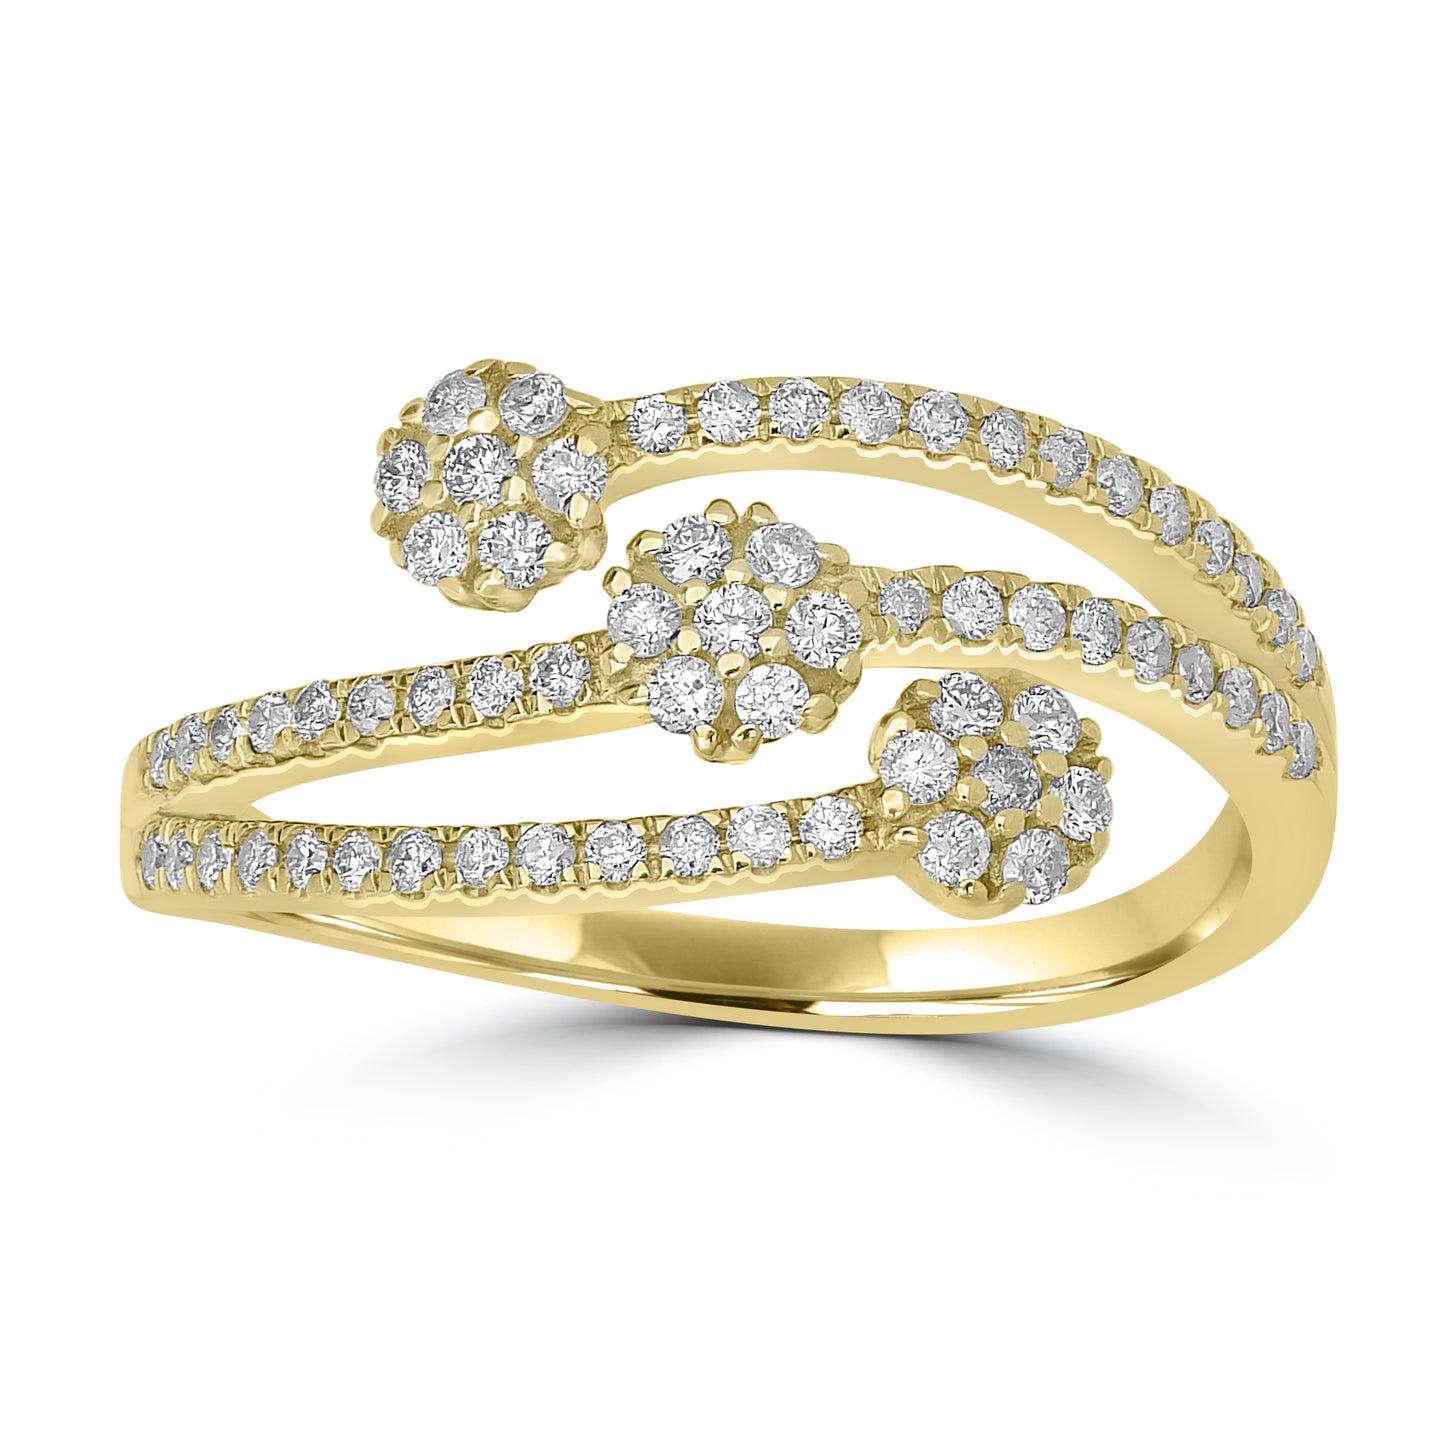 The 14K Yellow Gold Diamond Alyssa Wrap Ring